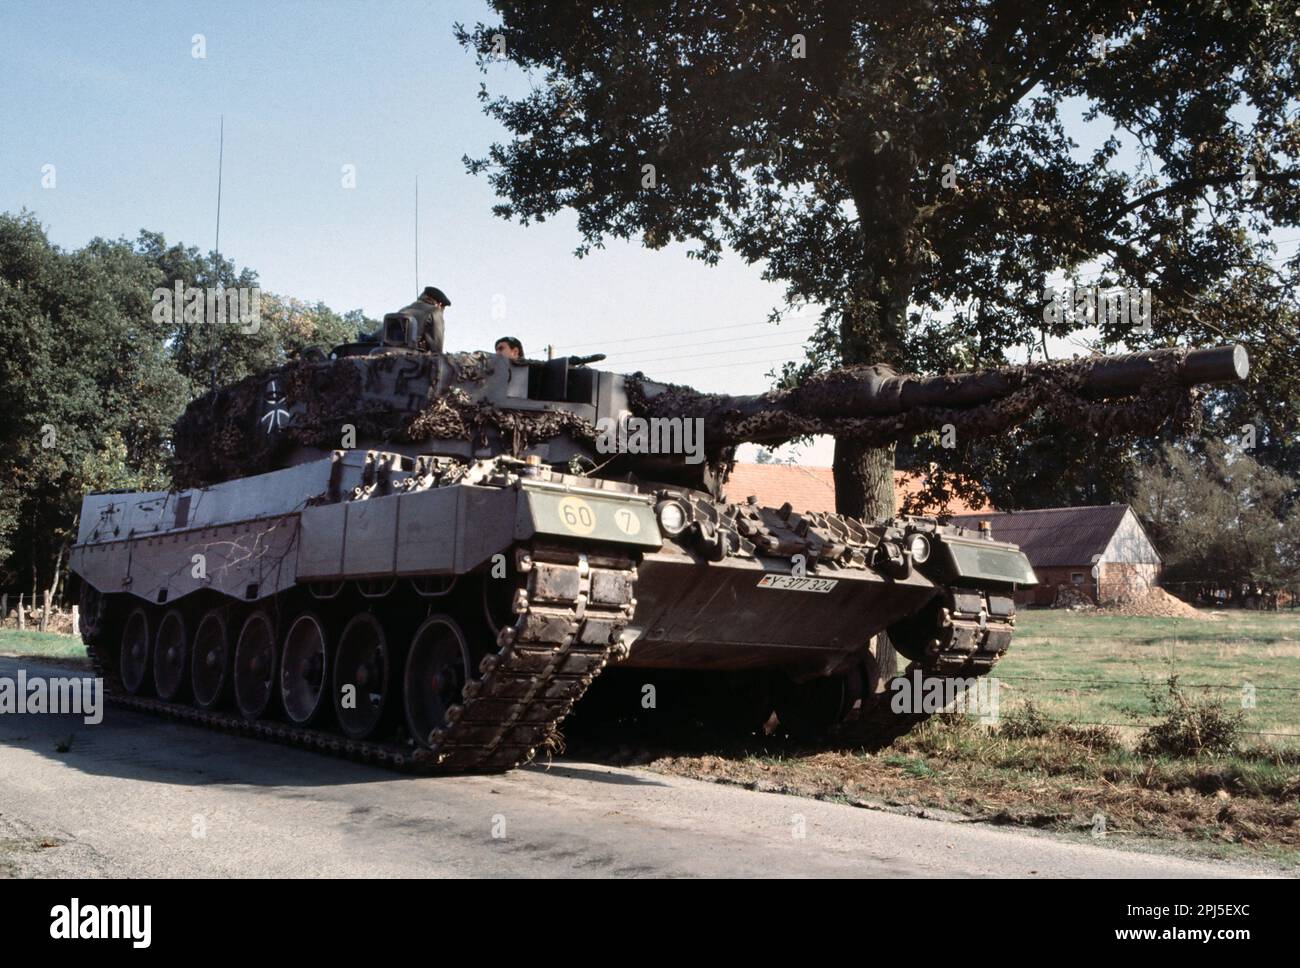 1/35 Built Modern German Leopard 2A6 in Ukraine War Camo Netting